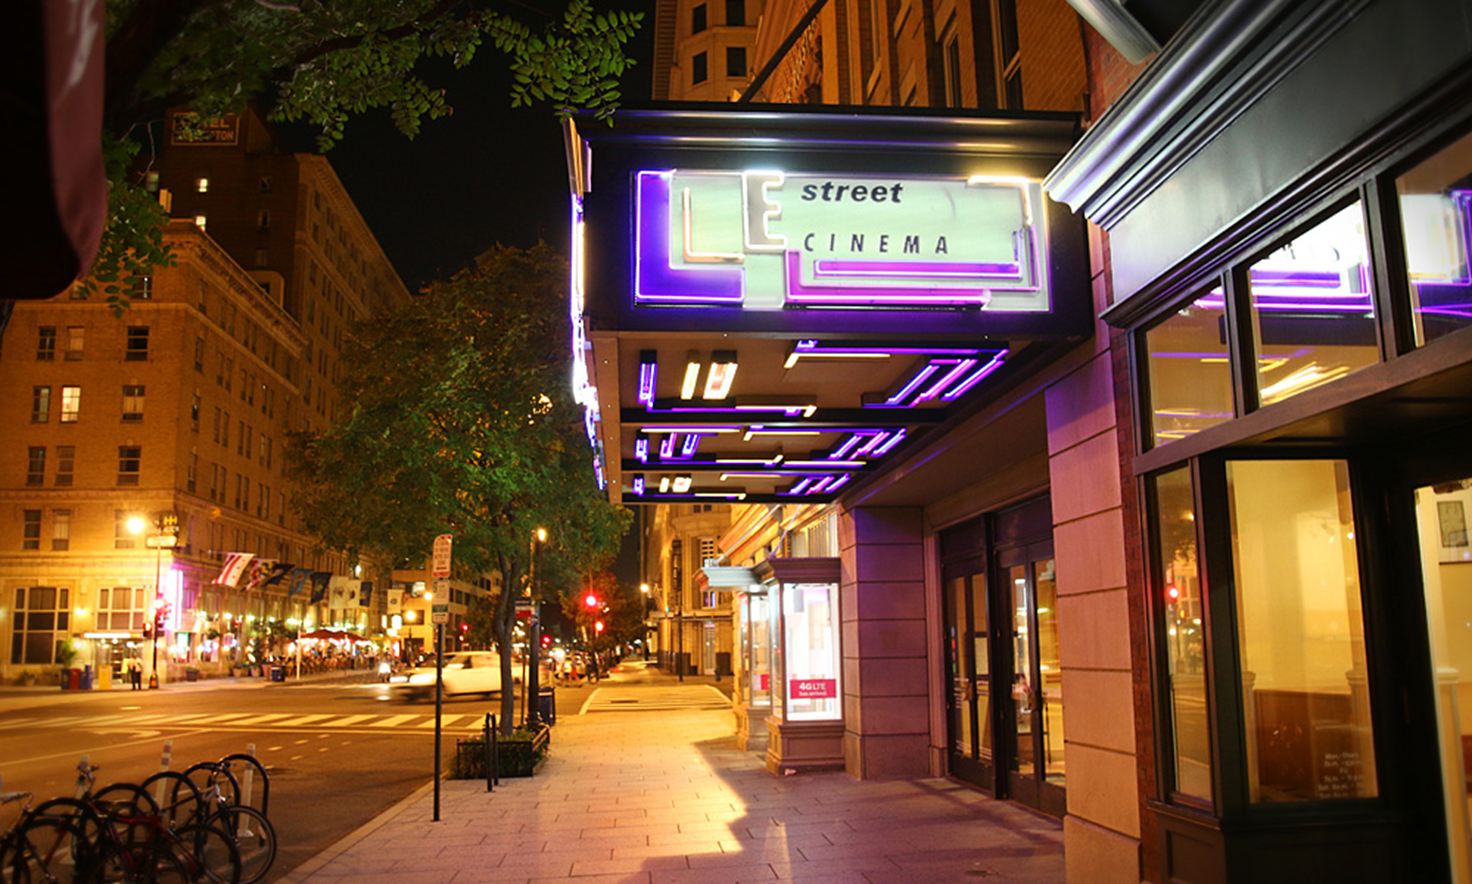 Landmark E Street Cinema